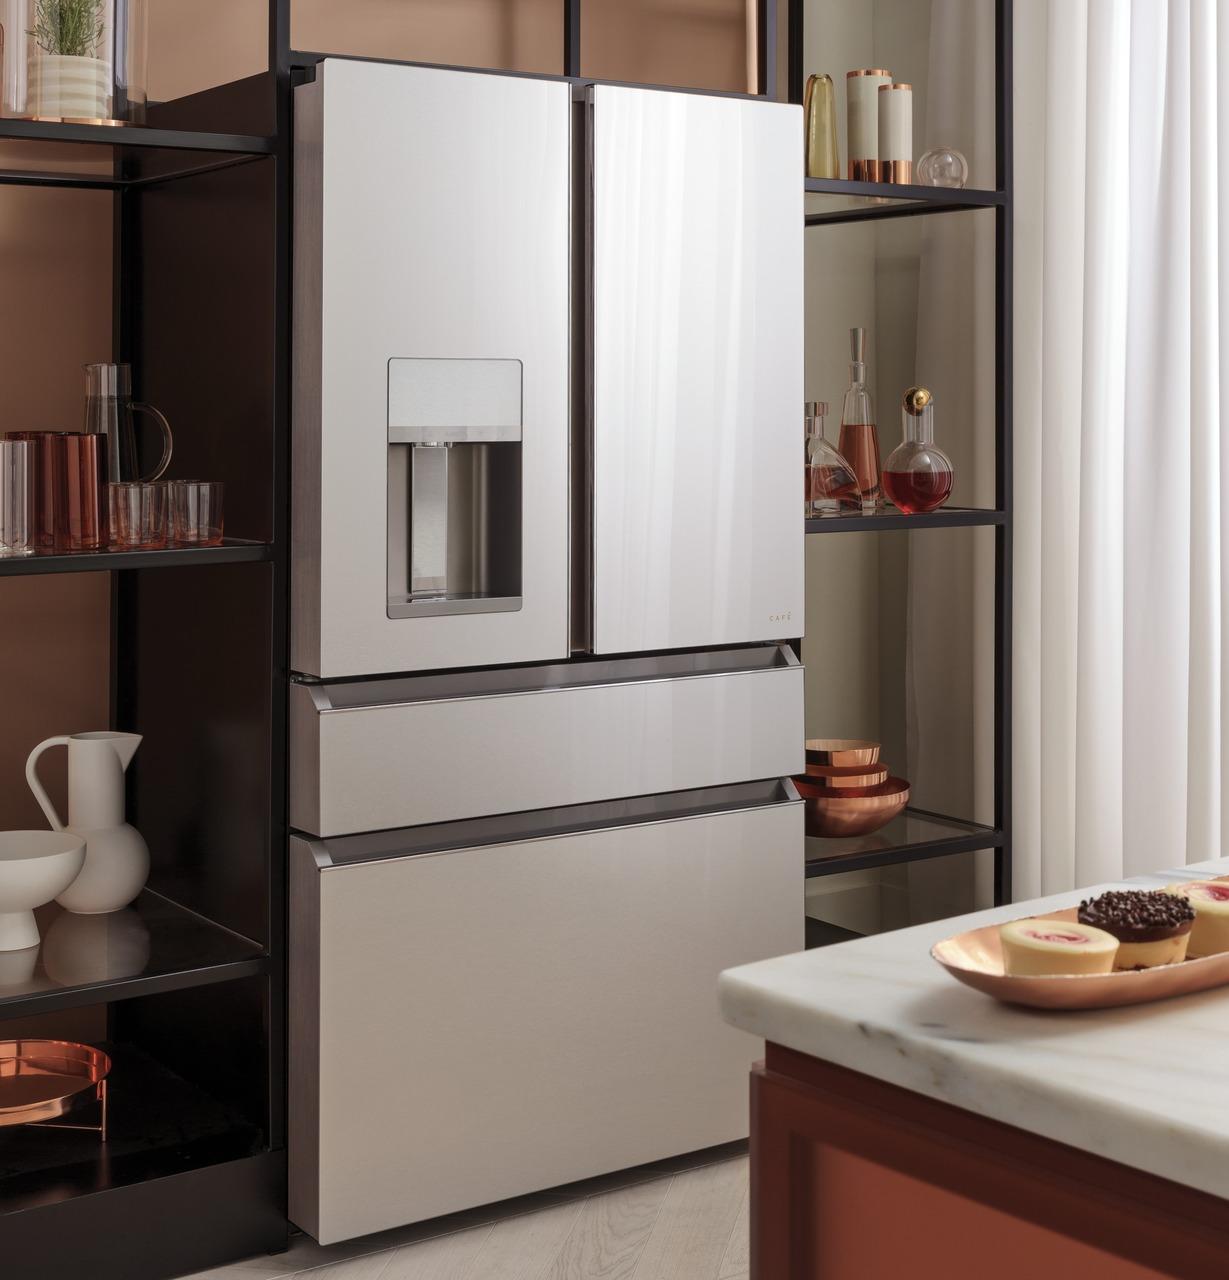 Cafe Caf(eback)™ ENERGY STAR® 27.8 Cu. Ft. Smart 4-Door French-Door Refrigerator in Platinum Glass